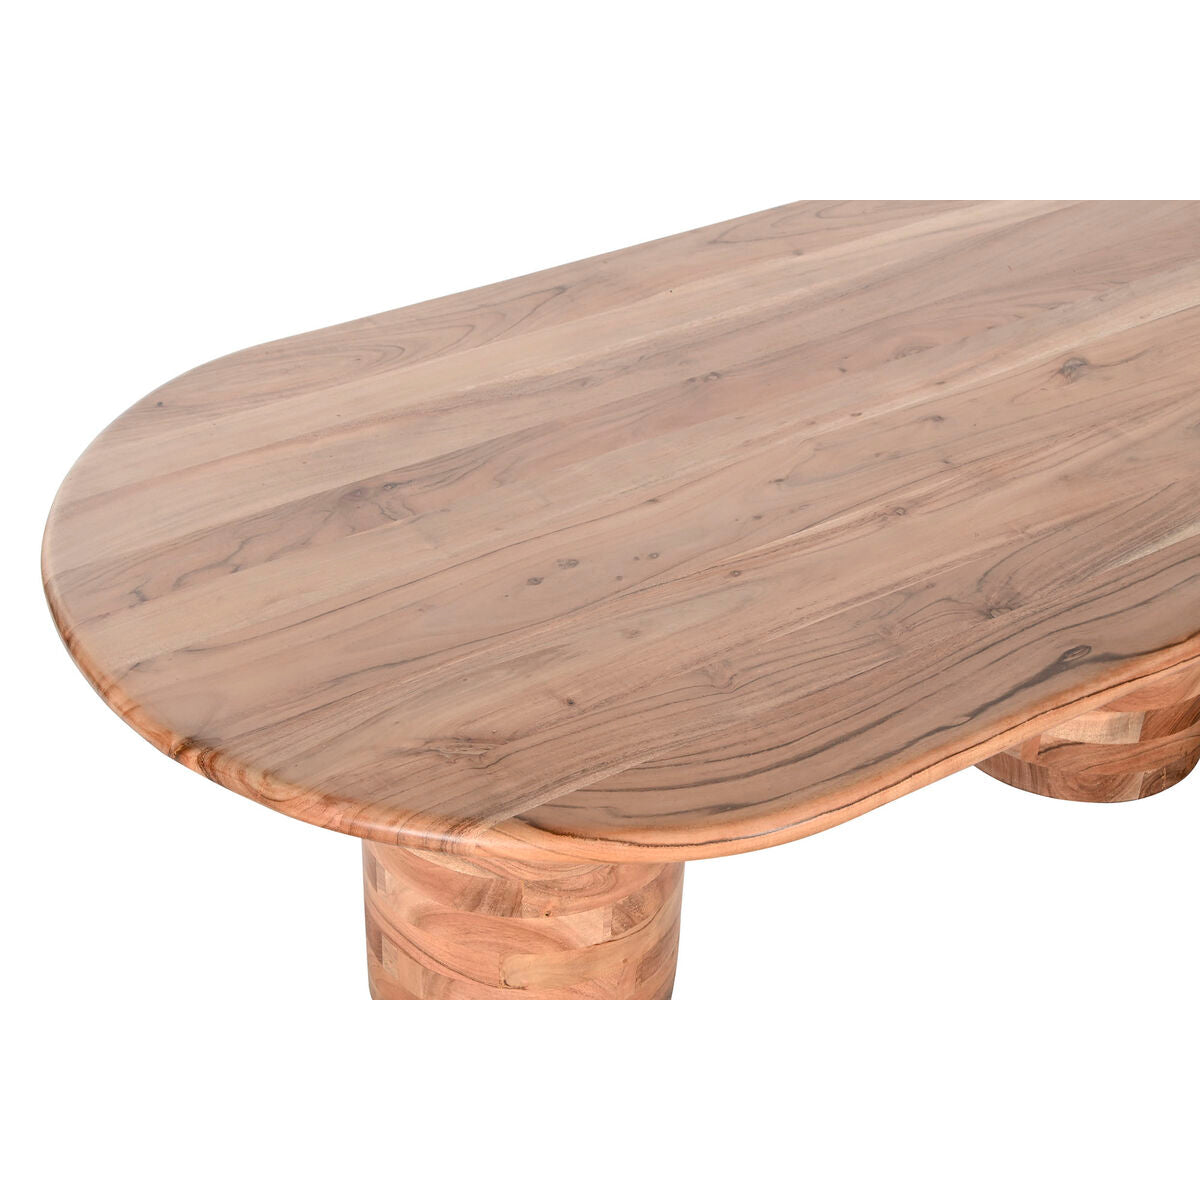 Oval Centre Table in Acacia (135 x 75 x 45 cm)